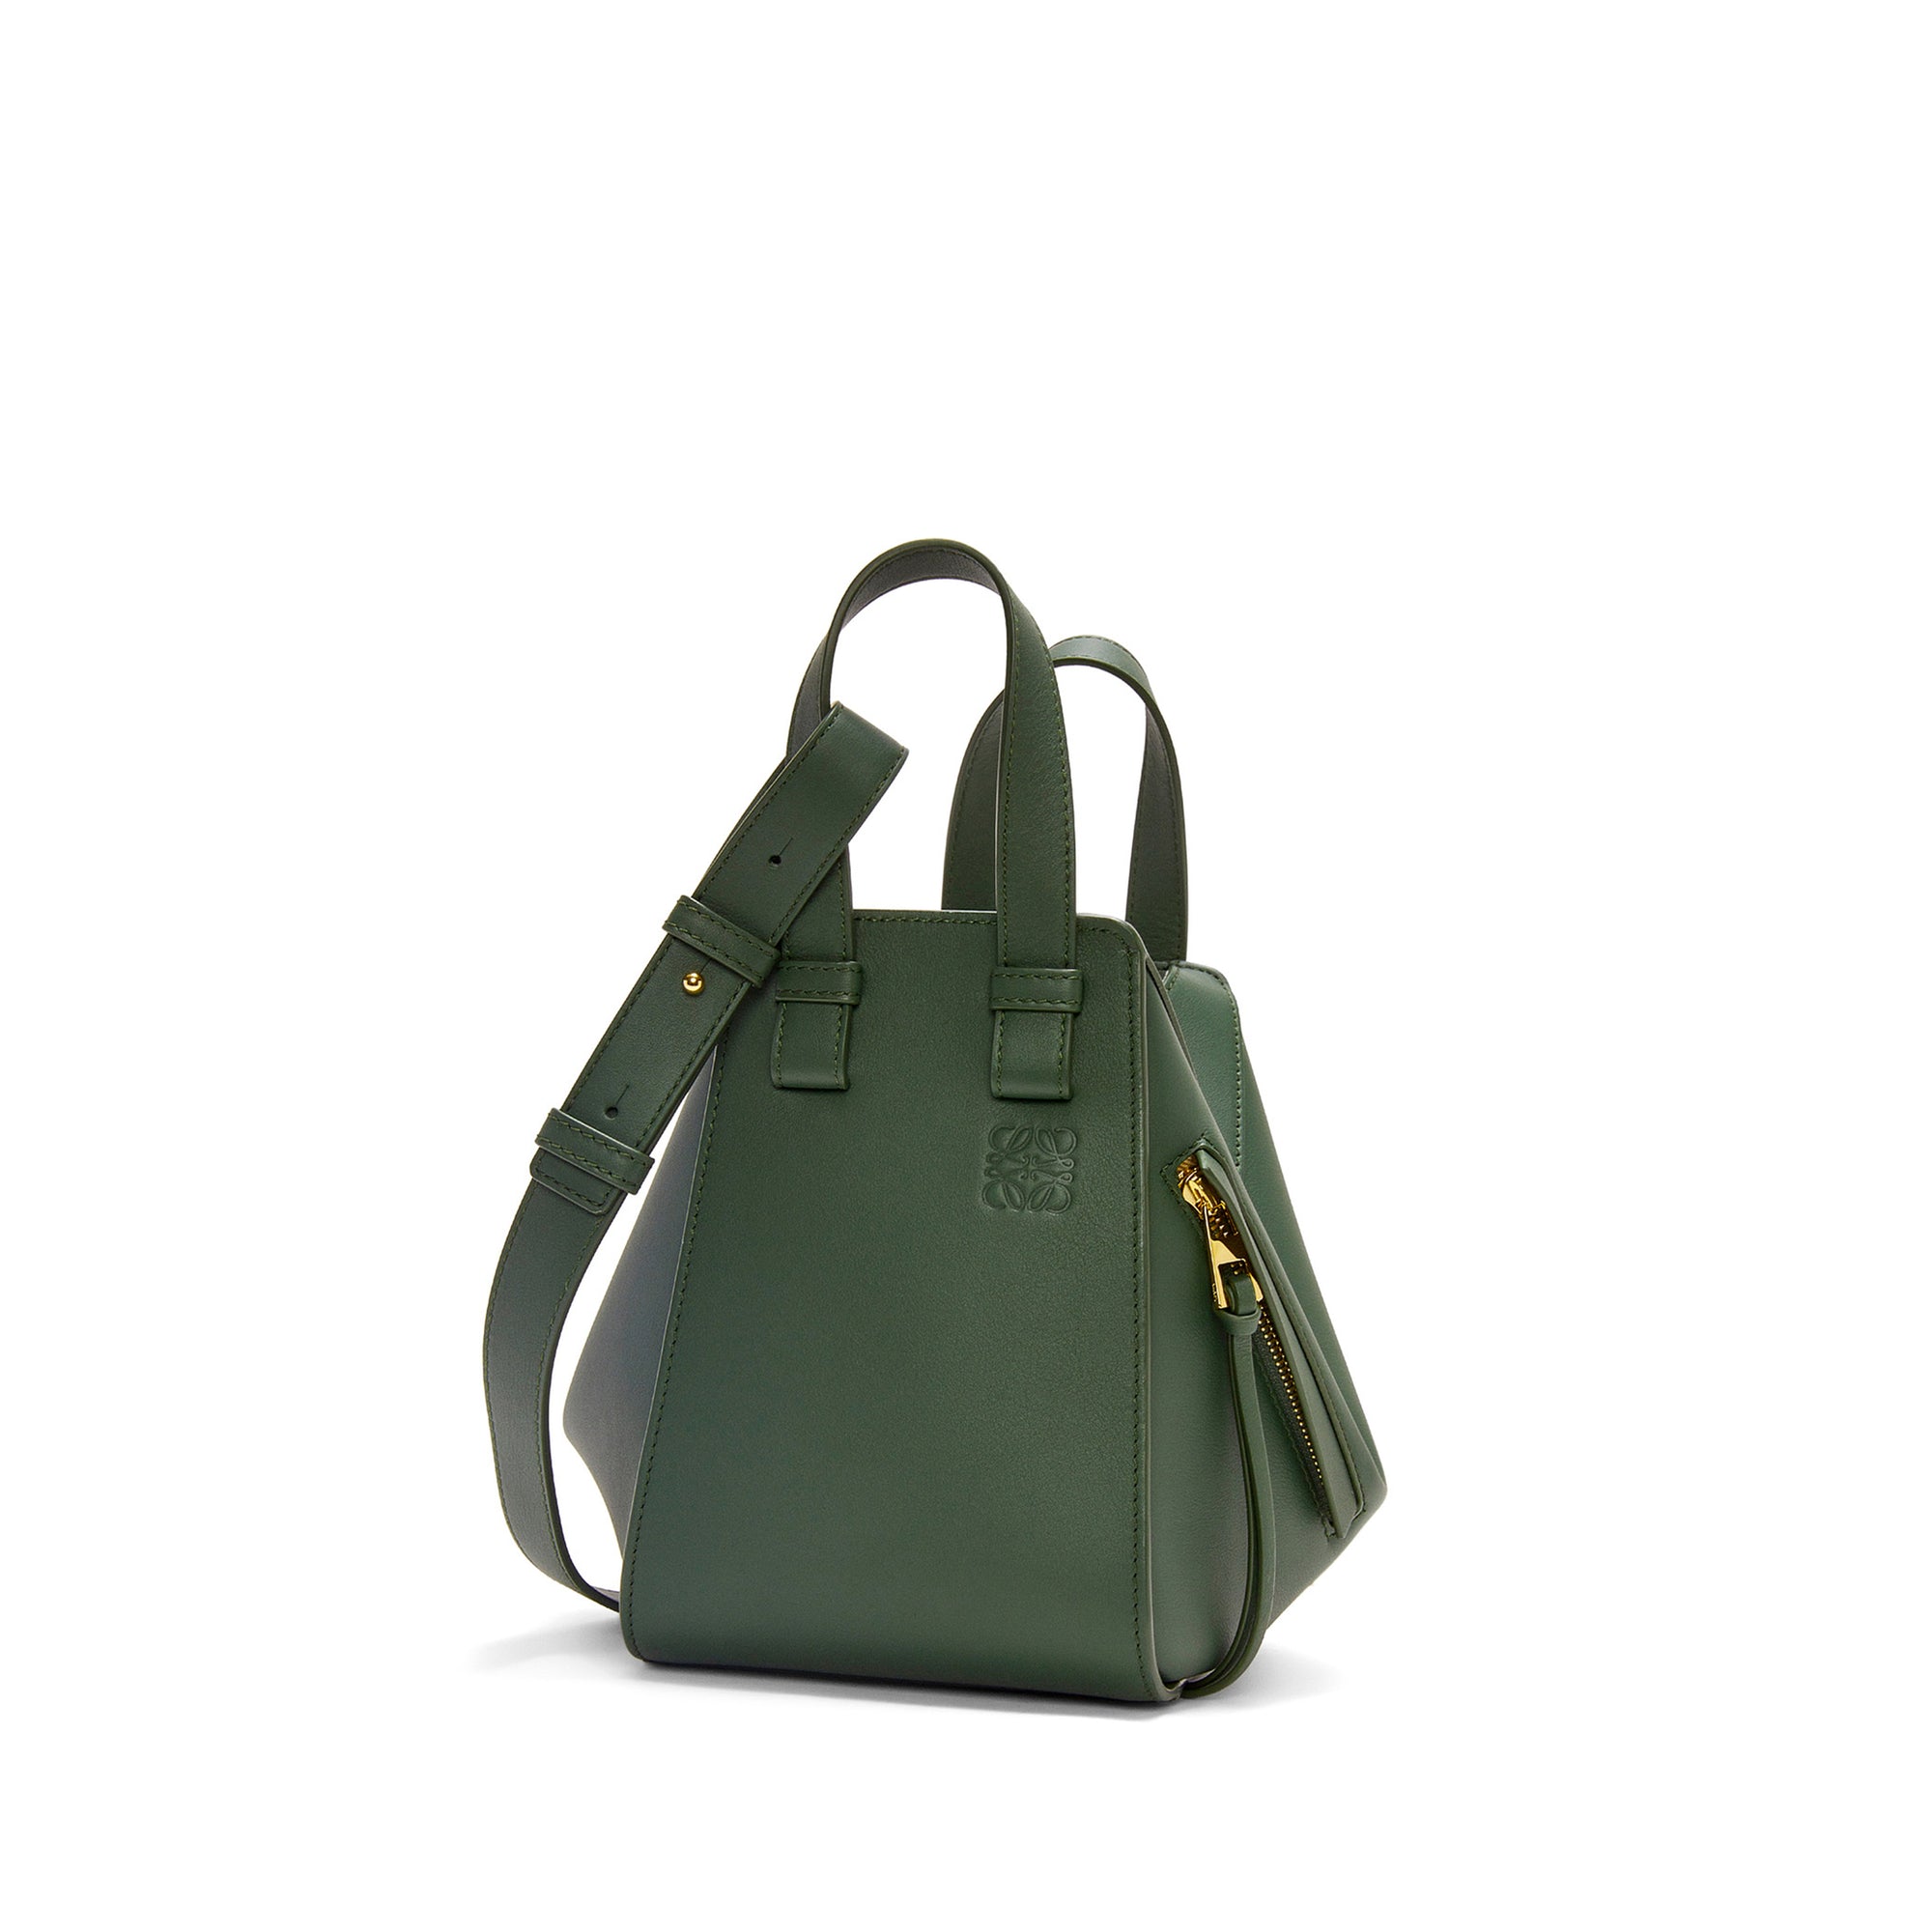 Loewe - Women's Hammock Compact Bag - (Bottle Green) view 1